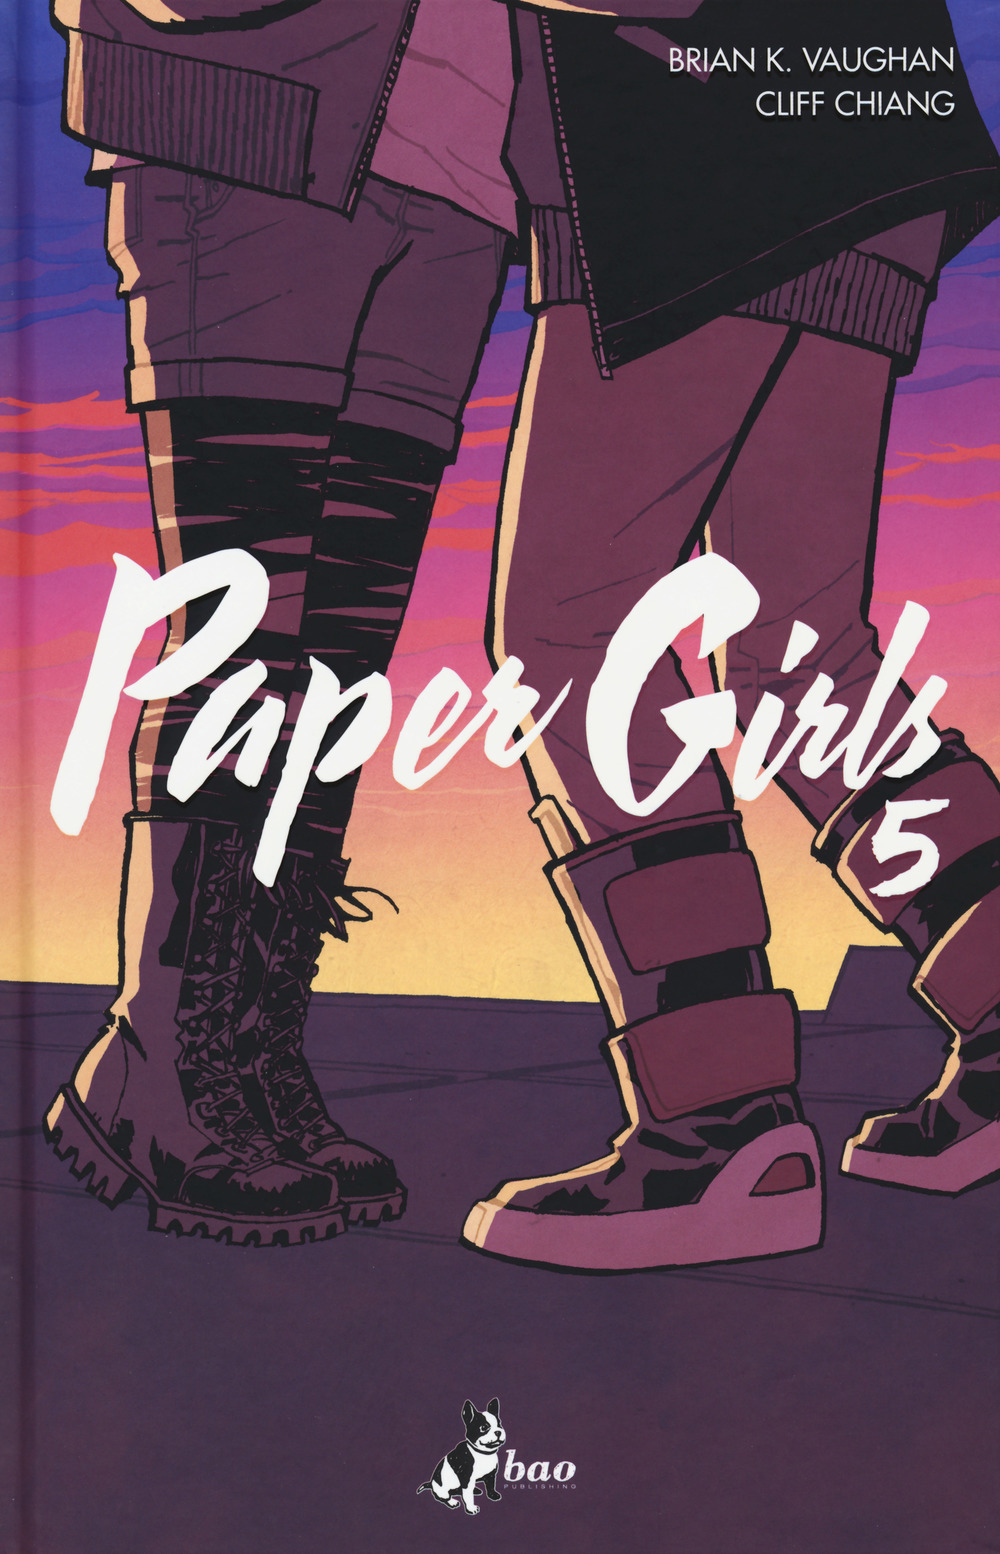 Brian K. Vaughan / Cliff Chiang - Paper Girls #05